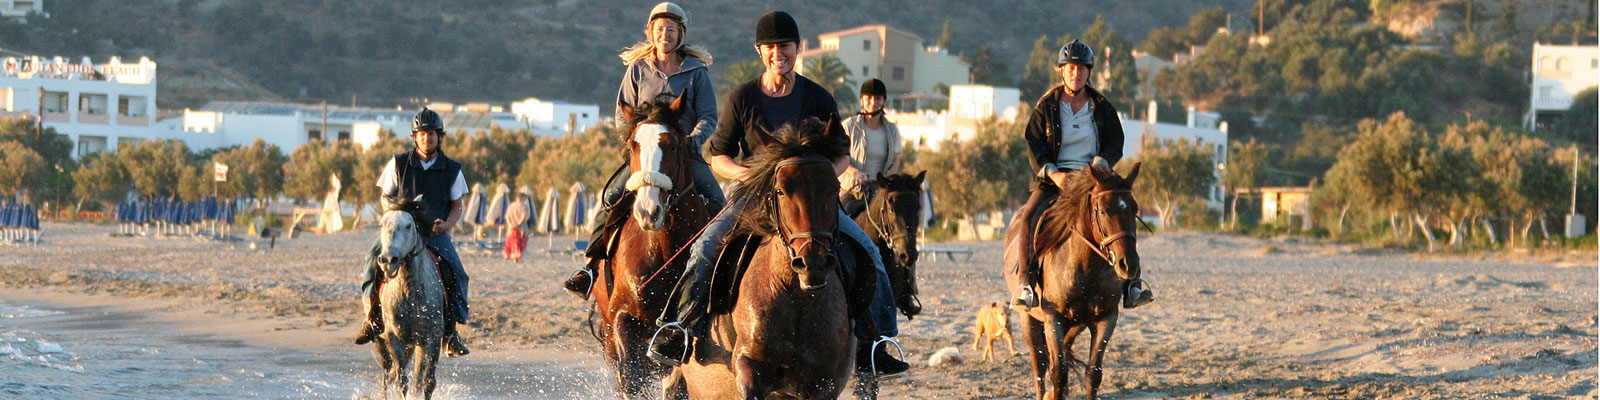 Holiday activities in Plakias, Crete